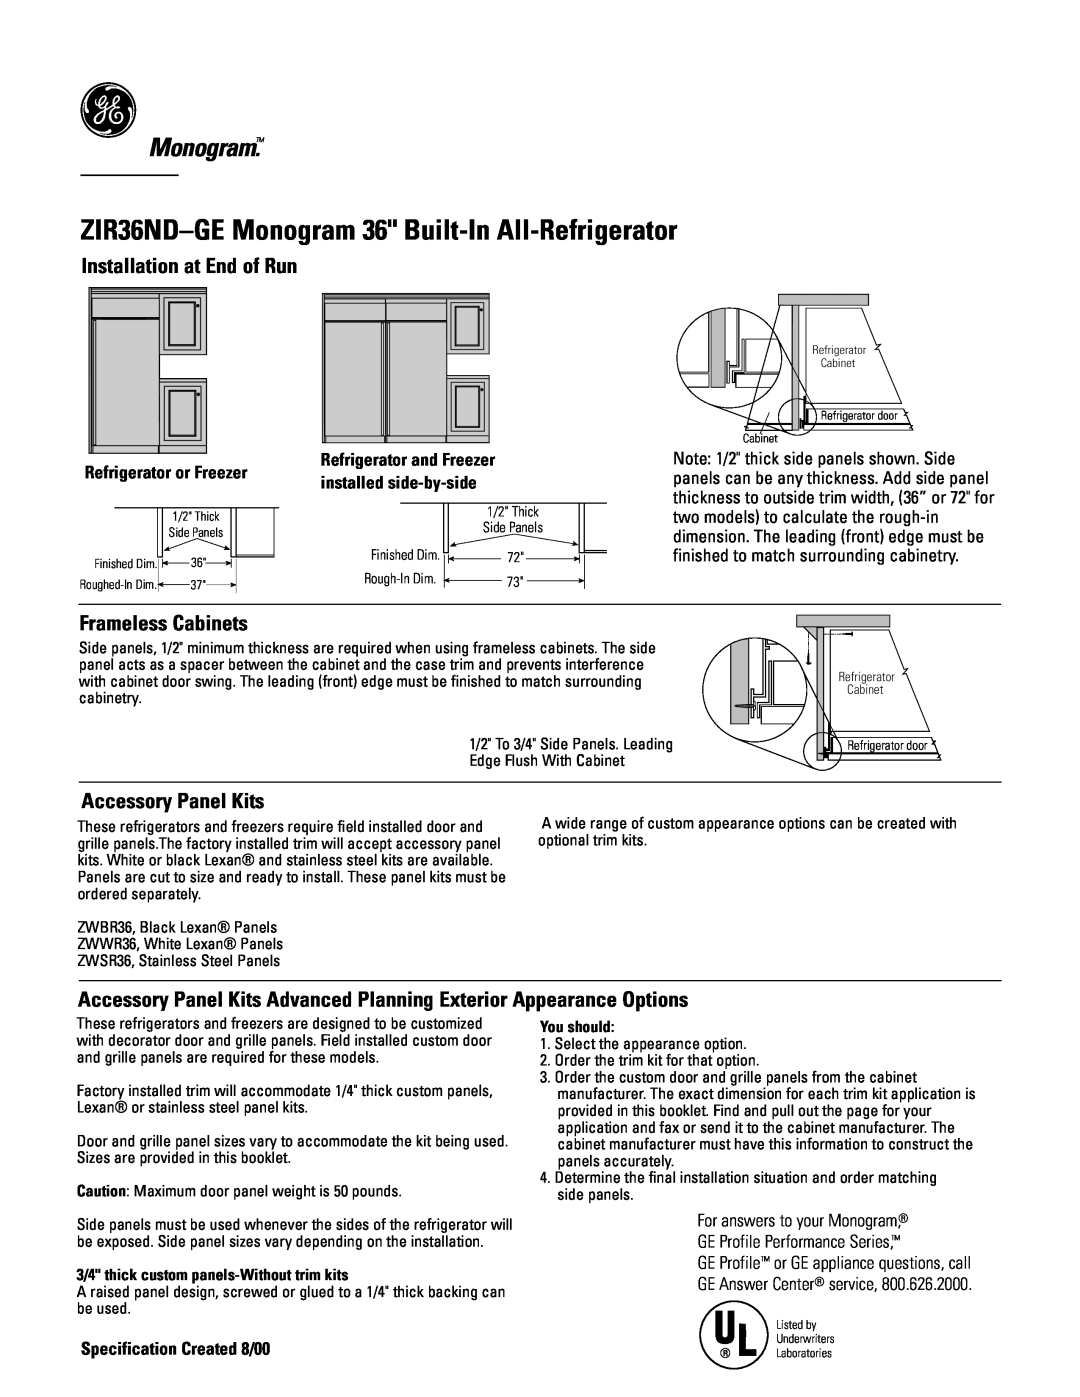 GE Monogram ZIR36NDGE ZIR36ND-GEMonogram 36 Built-In All-Refrigerator, Installation at End of Run, Frameless Cabinets 